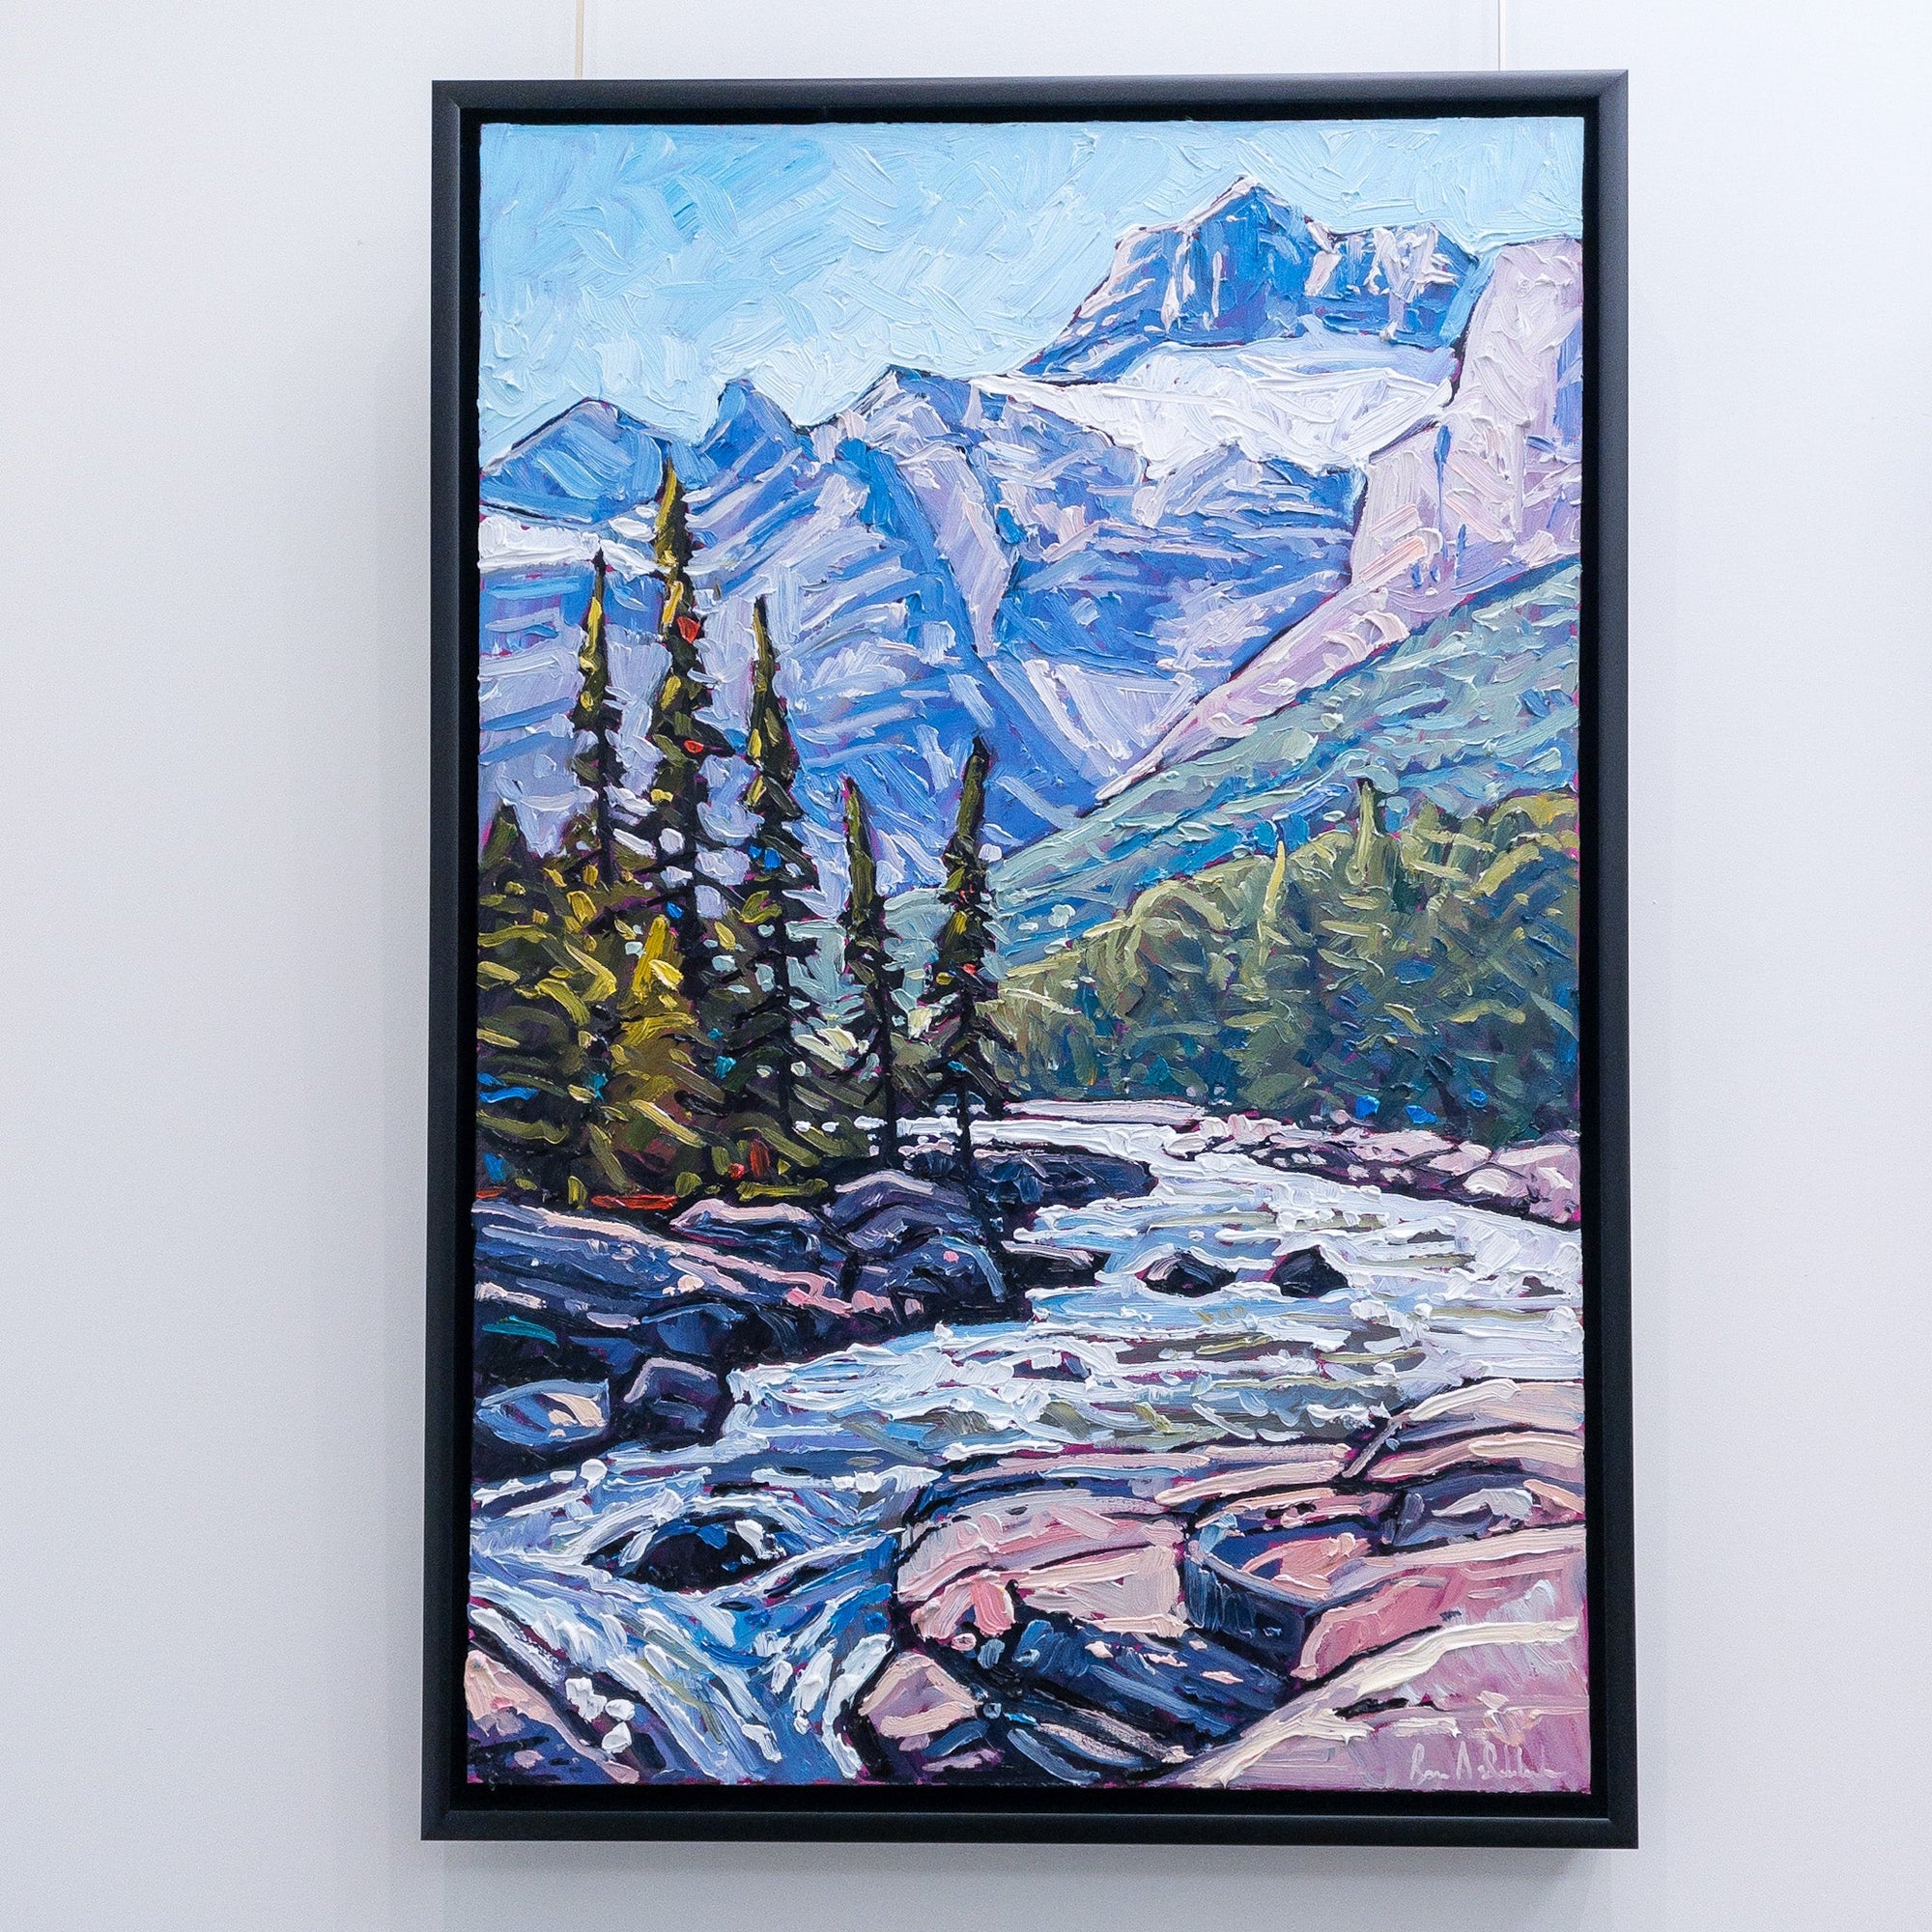 Ryan Sobkovich Meandering River, Alberta Foothills | 36" x 24" Oil on Canvas